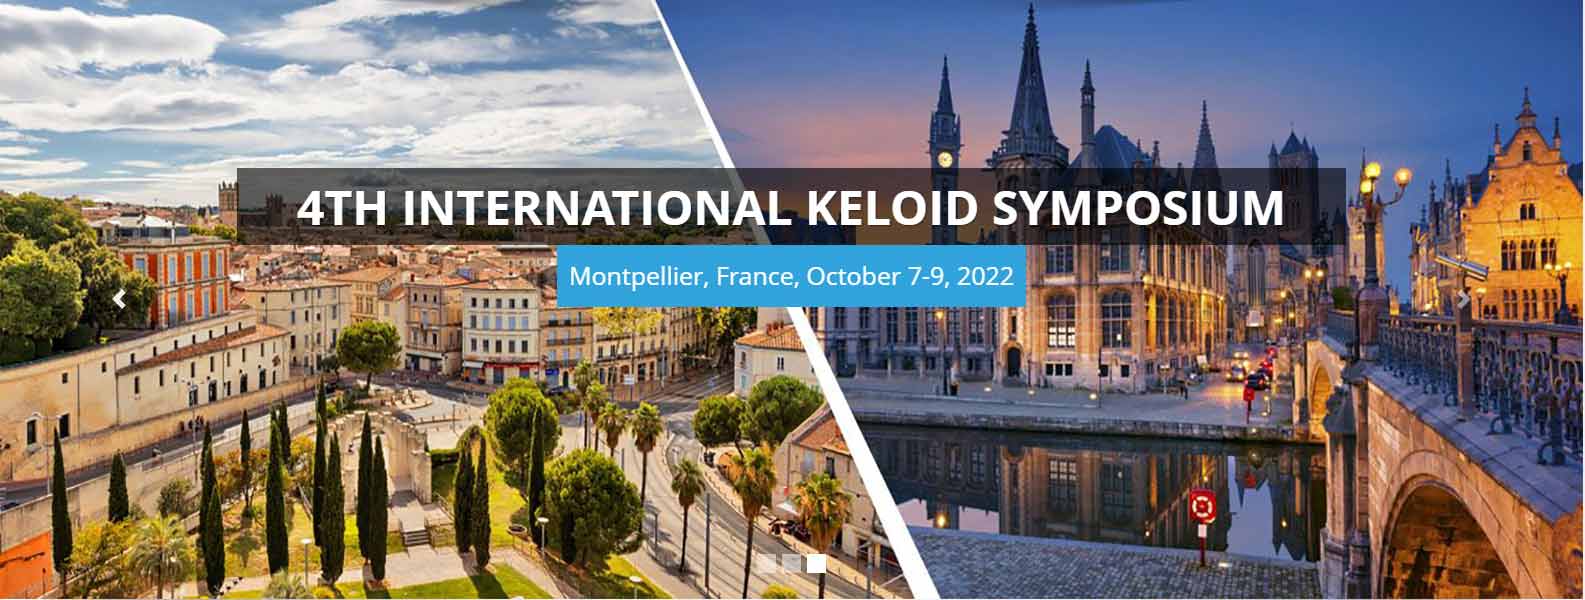 4th Annual International Keloid Symposium Banner